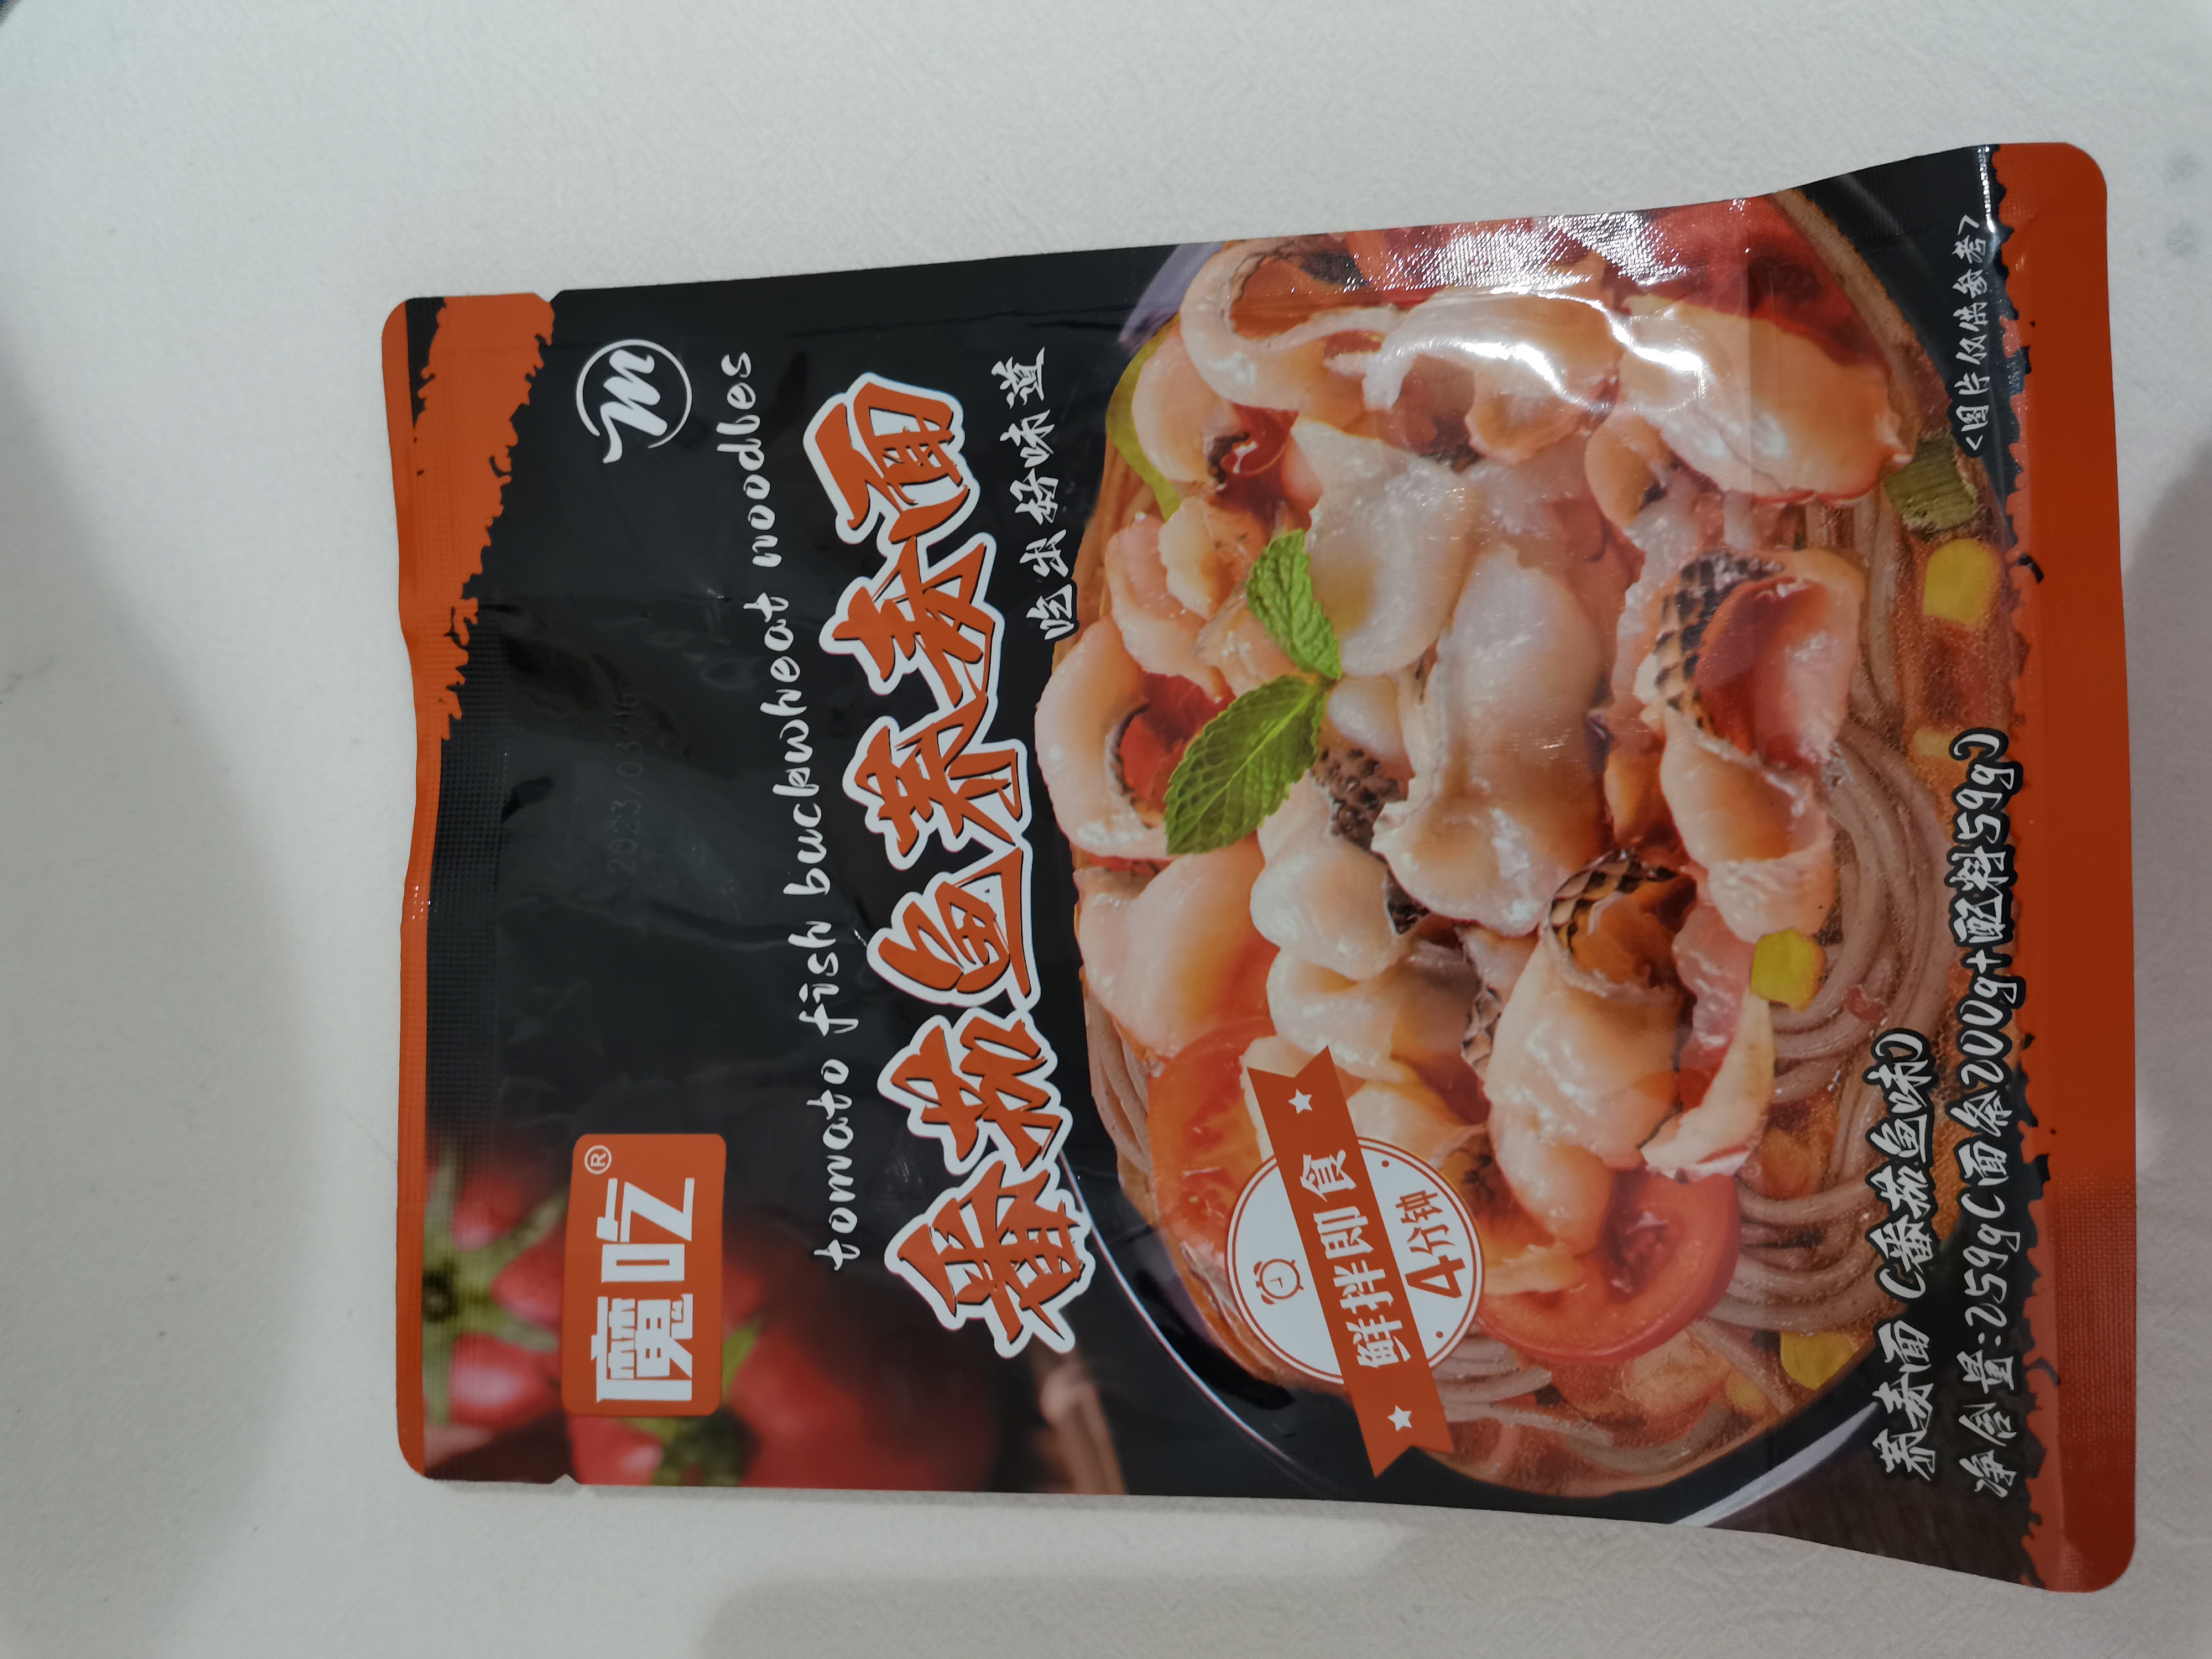 Tomato fish buckwheat noodles 259g